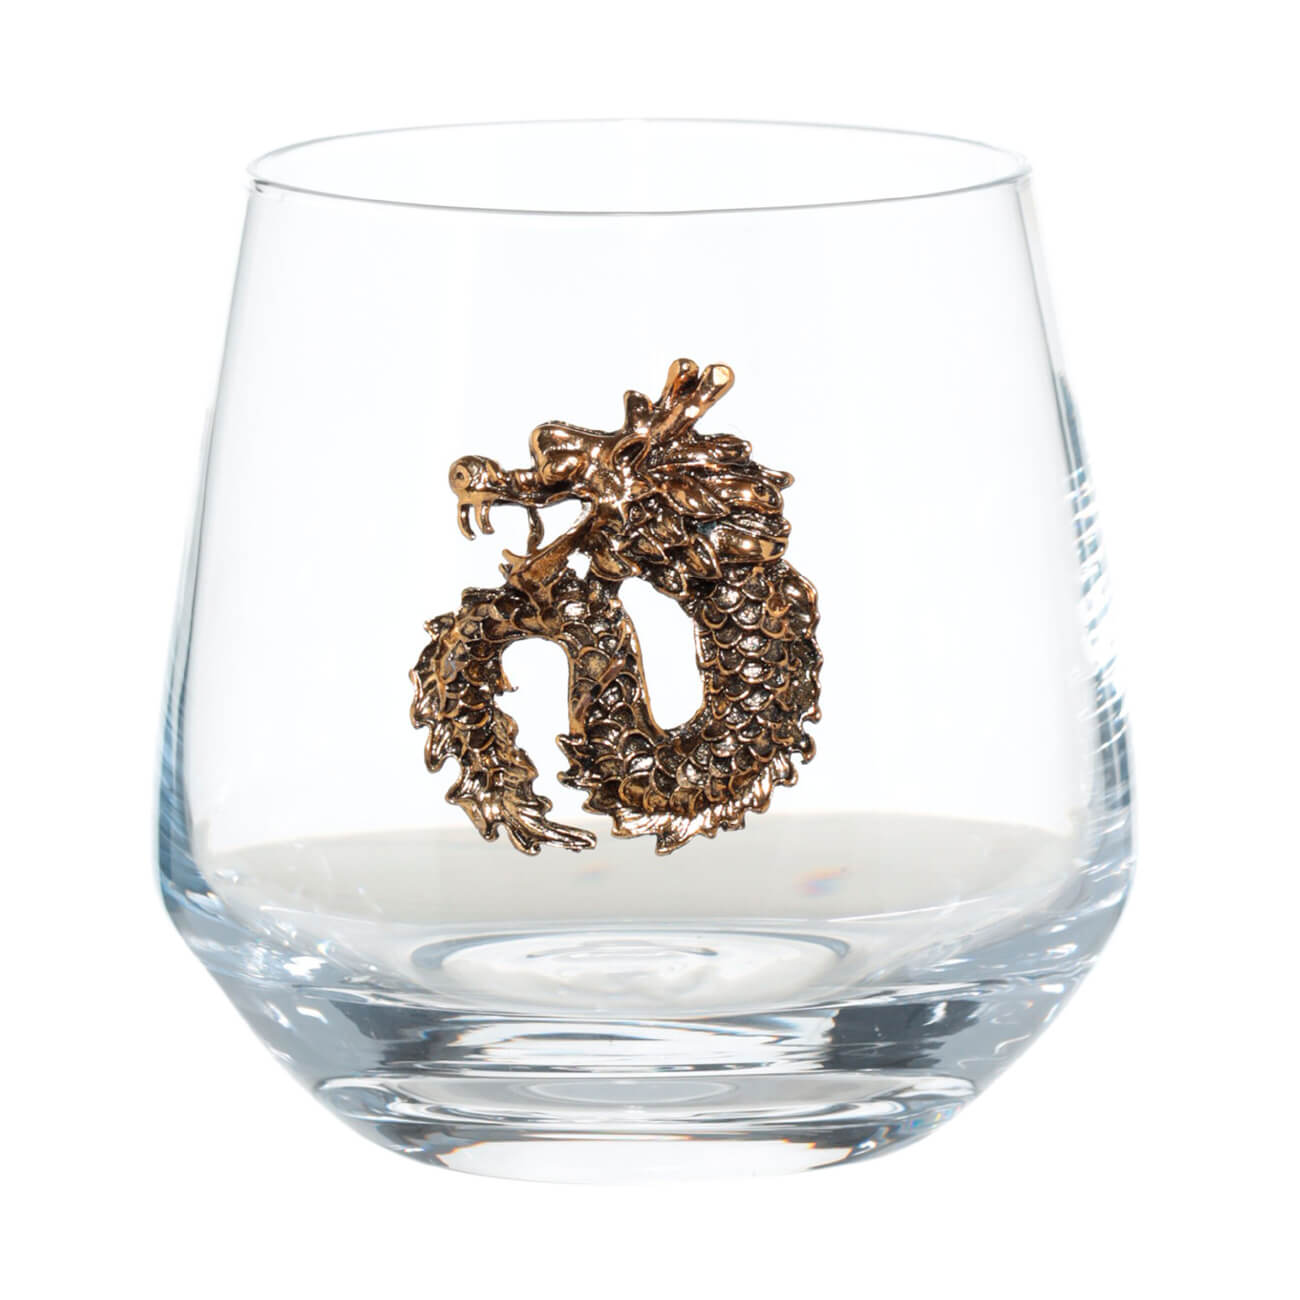 Стакан для виски, 370 мл, стекло/металл, Золотистый дракон, Lux elements стакан для виски большого успеха 250 мл